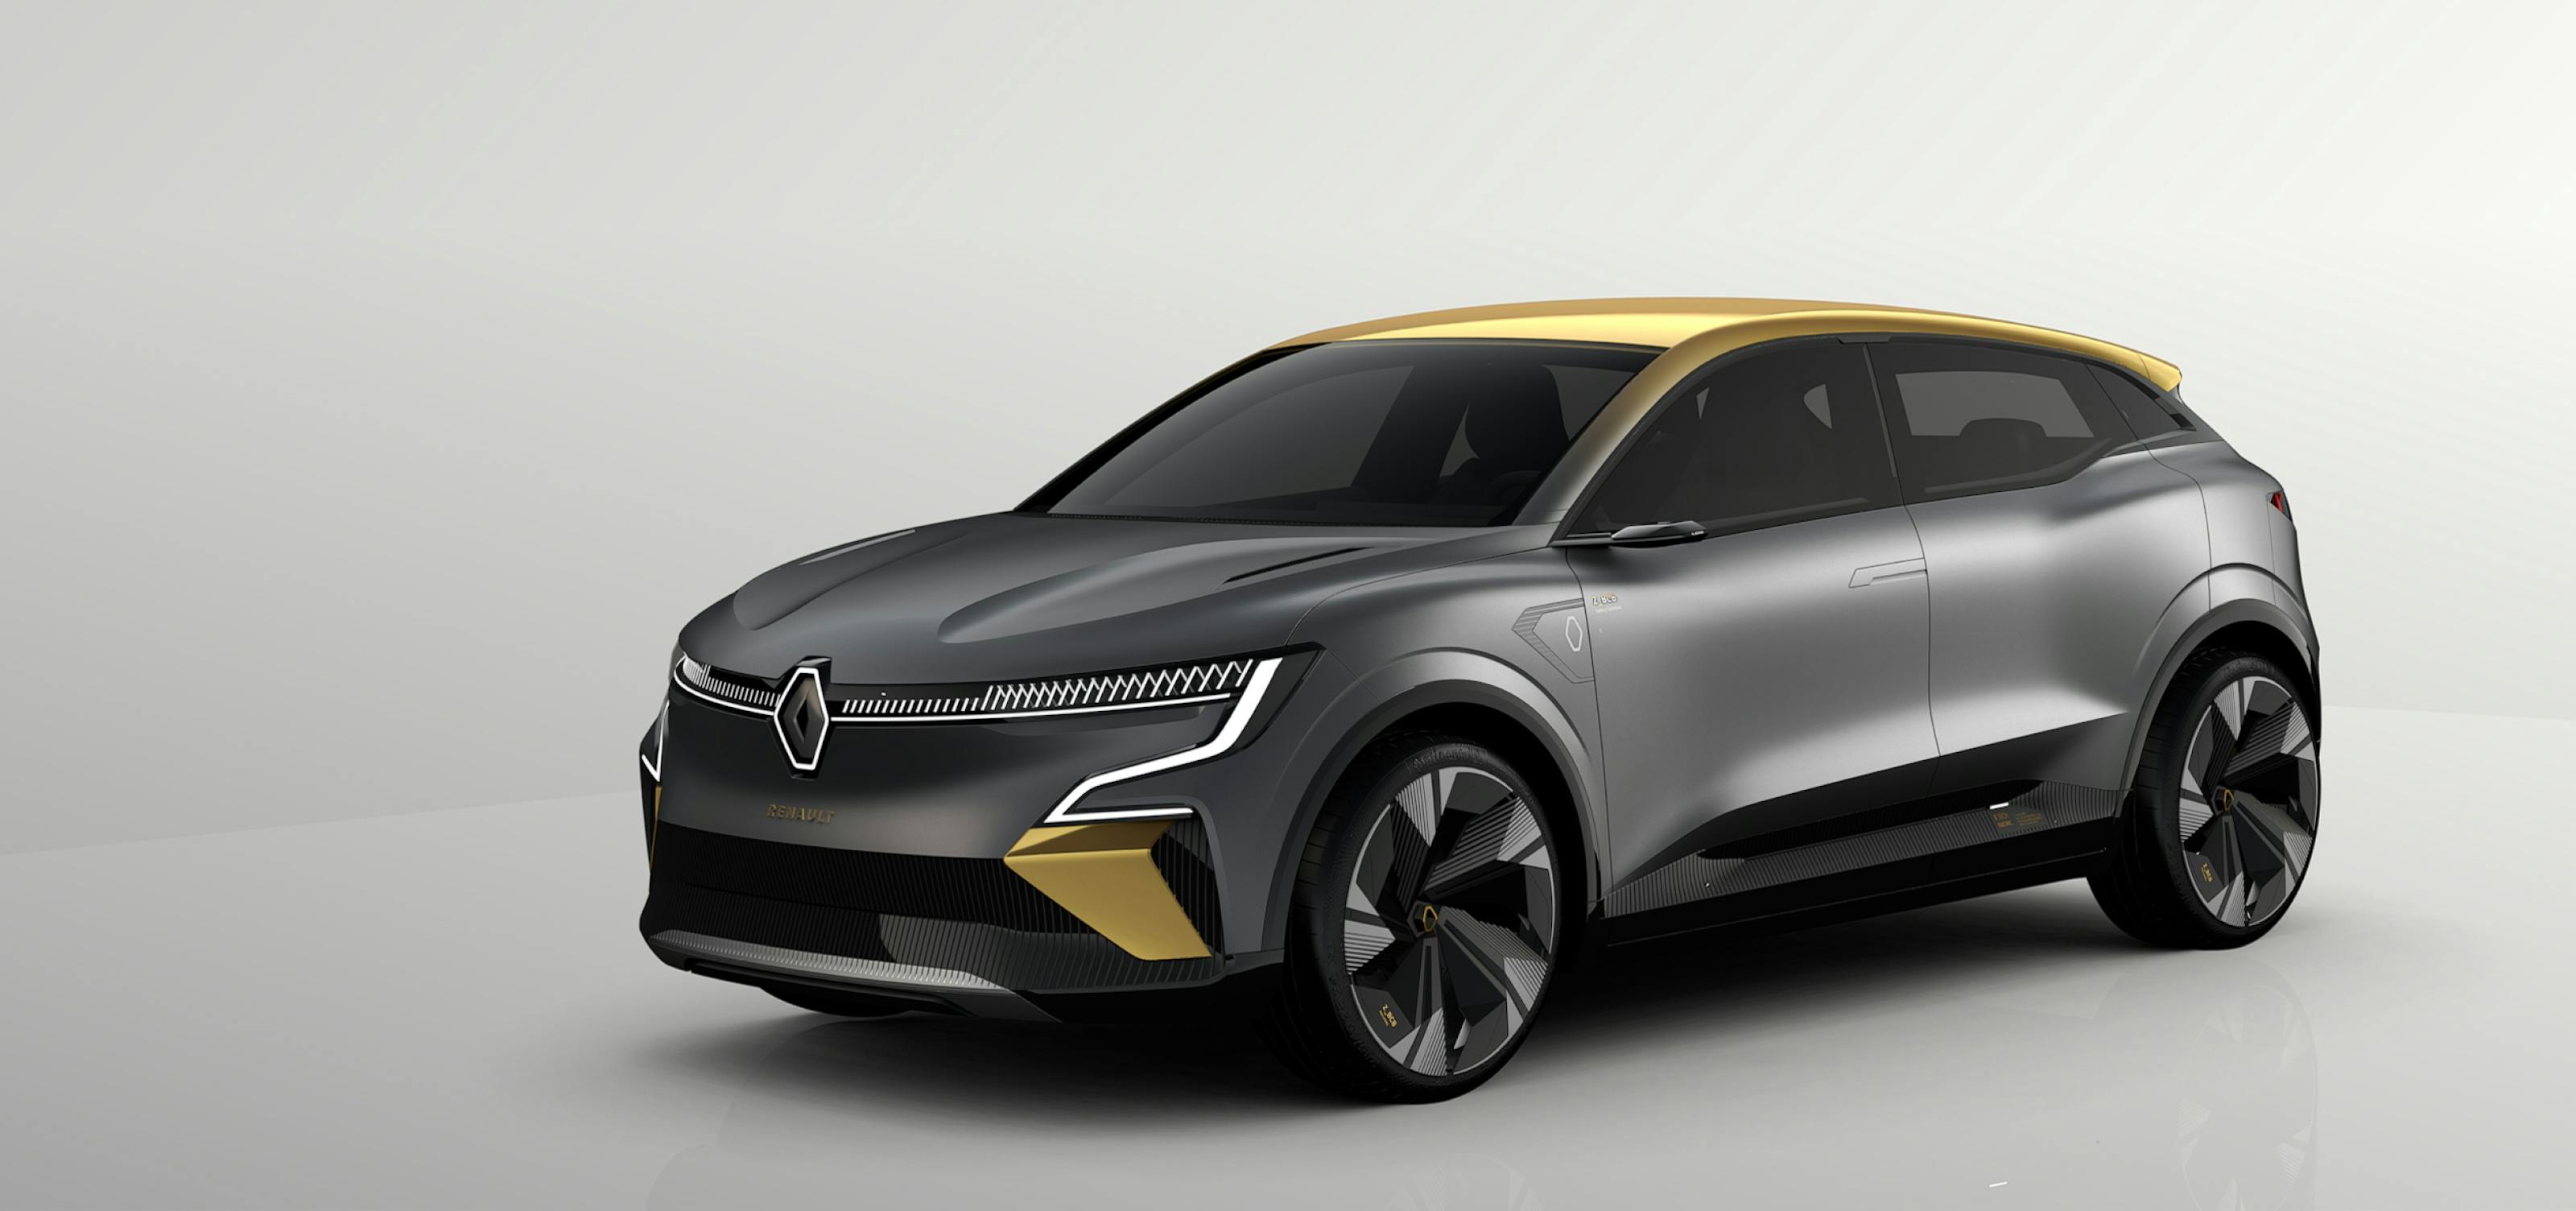 New Renault MEGANE eVISION electric concept car